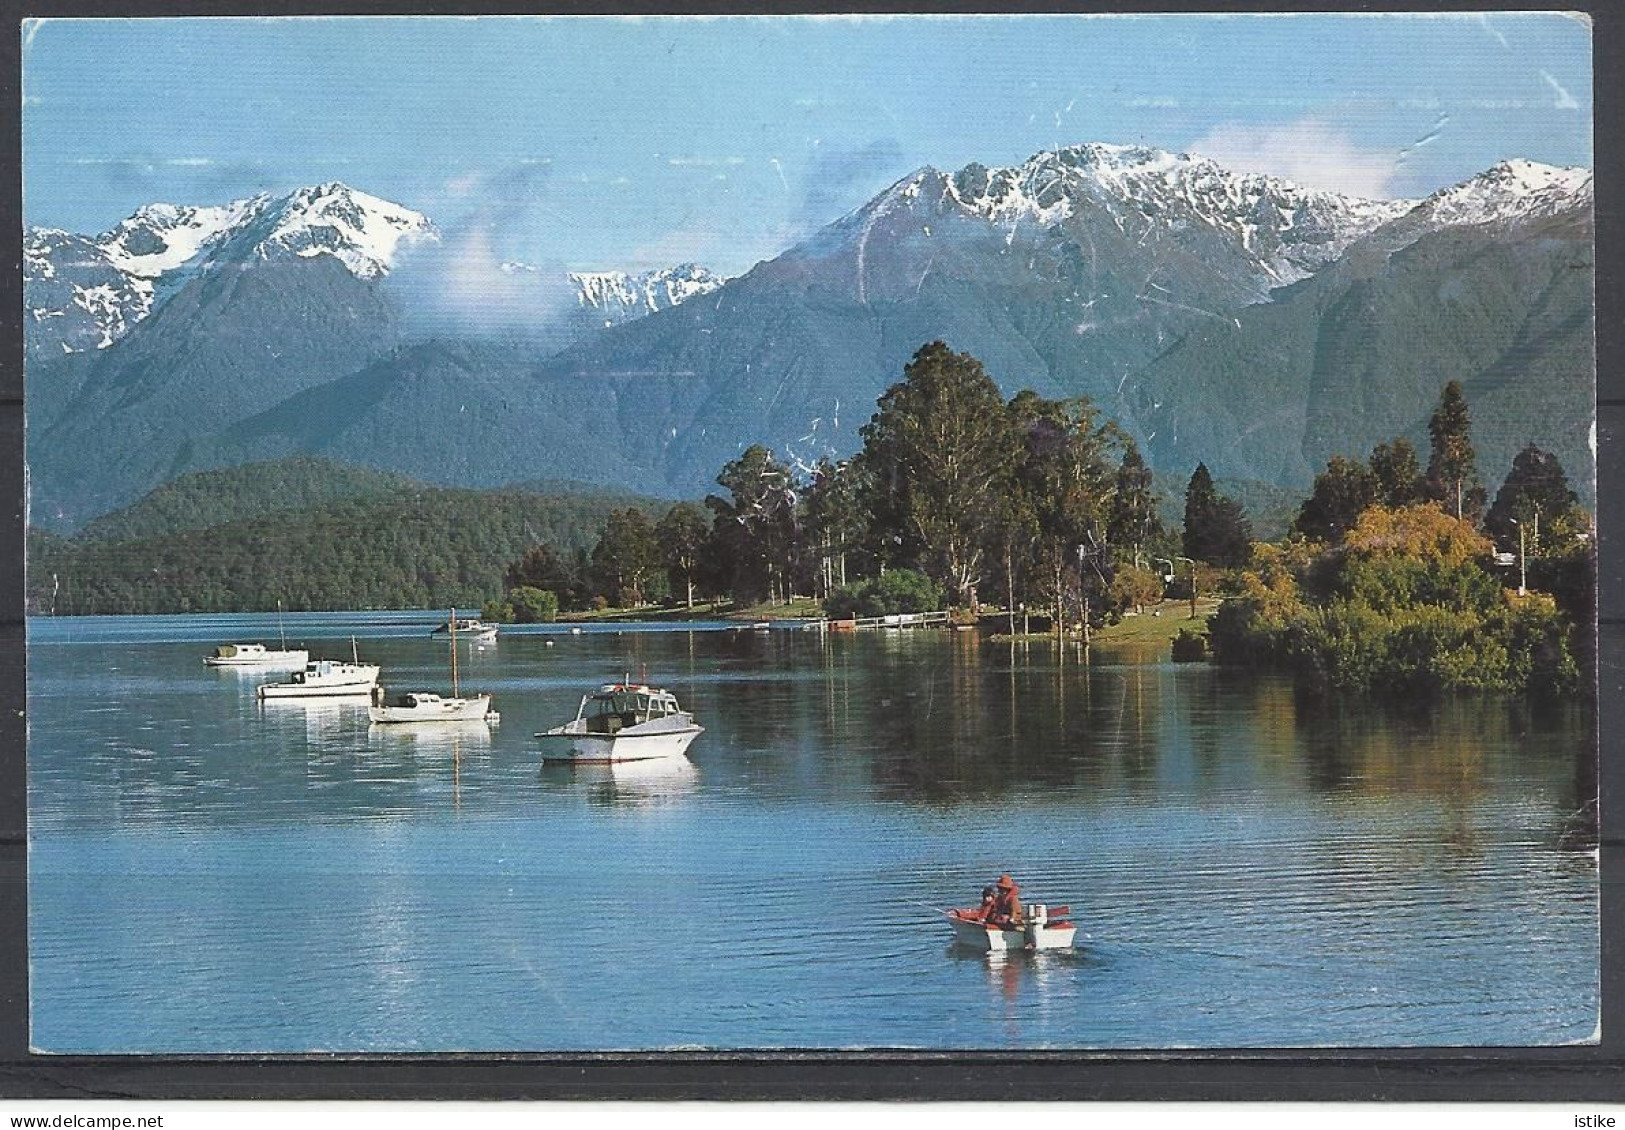 New Zealand, Lake Te Anau, Nice Stamp, Airmail Label,1987. - Neuseeland